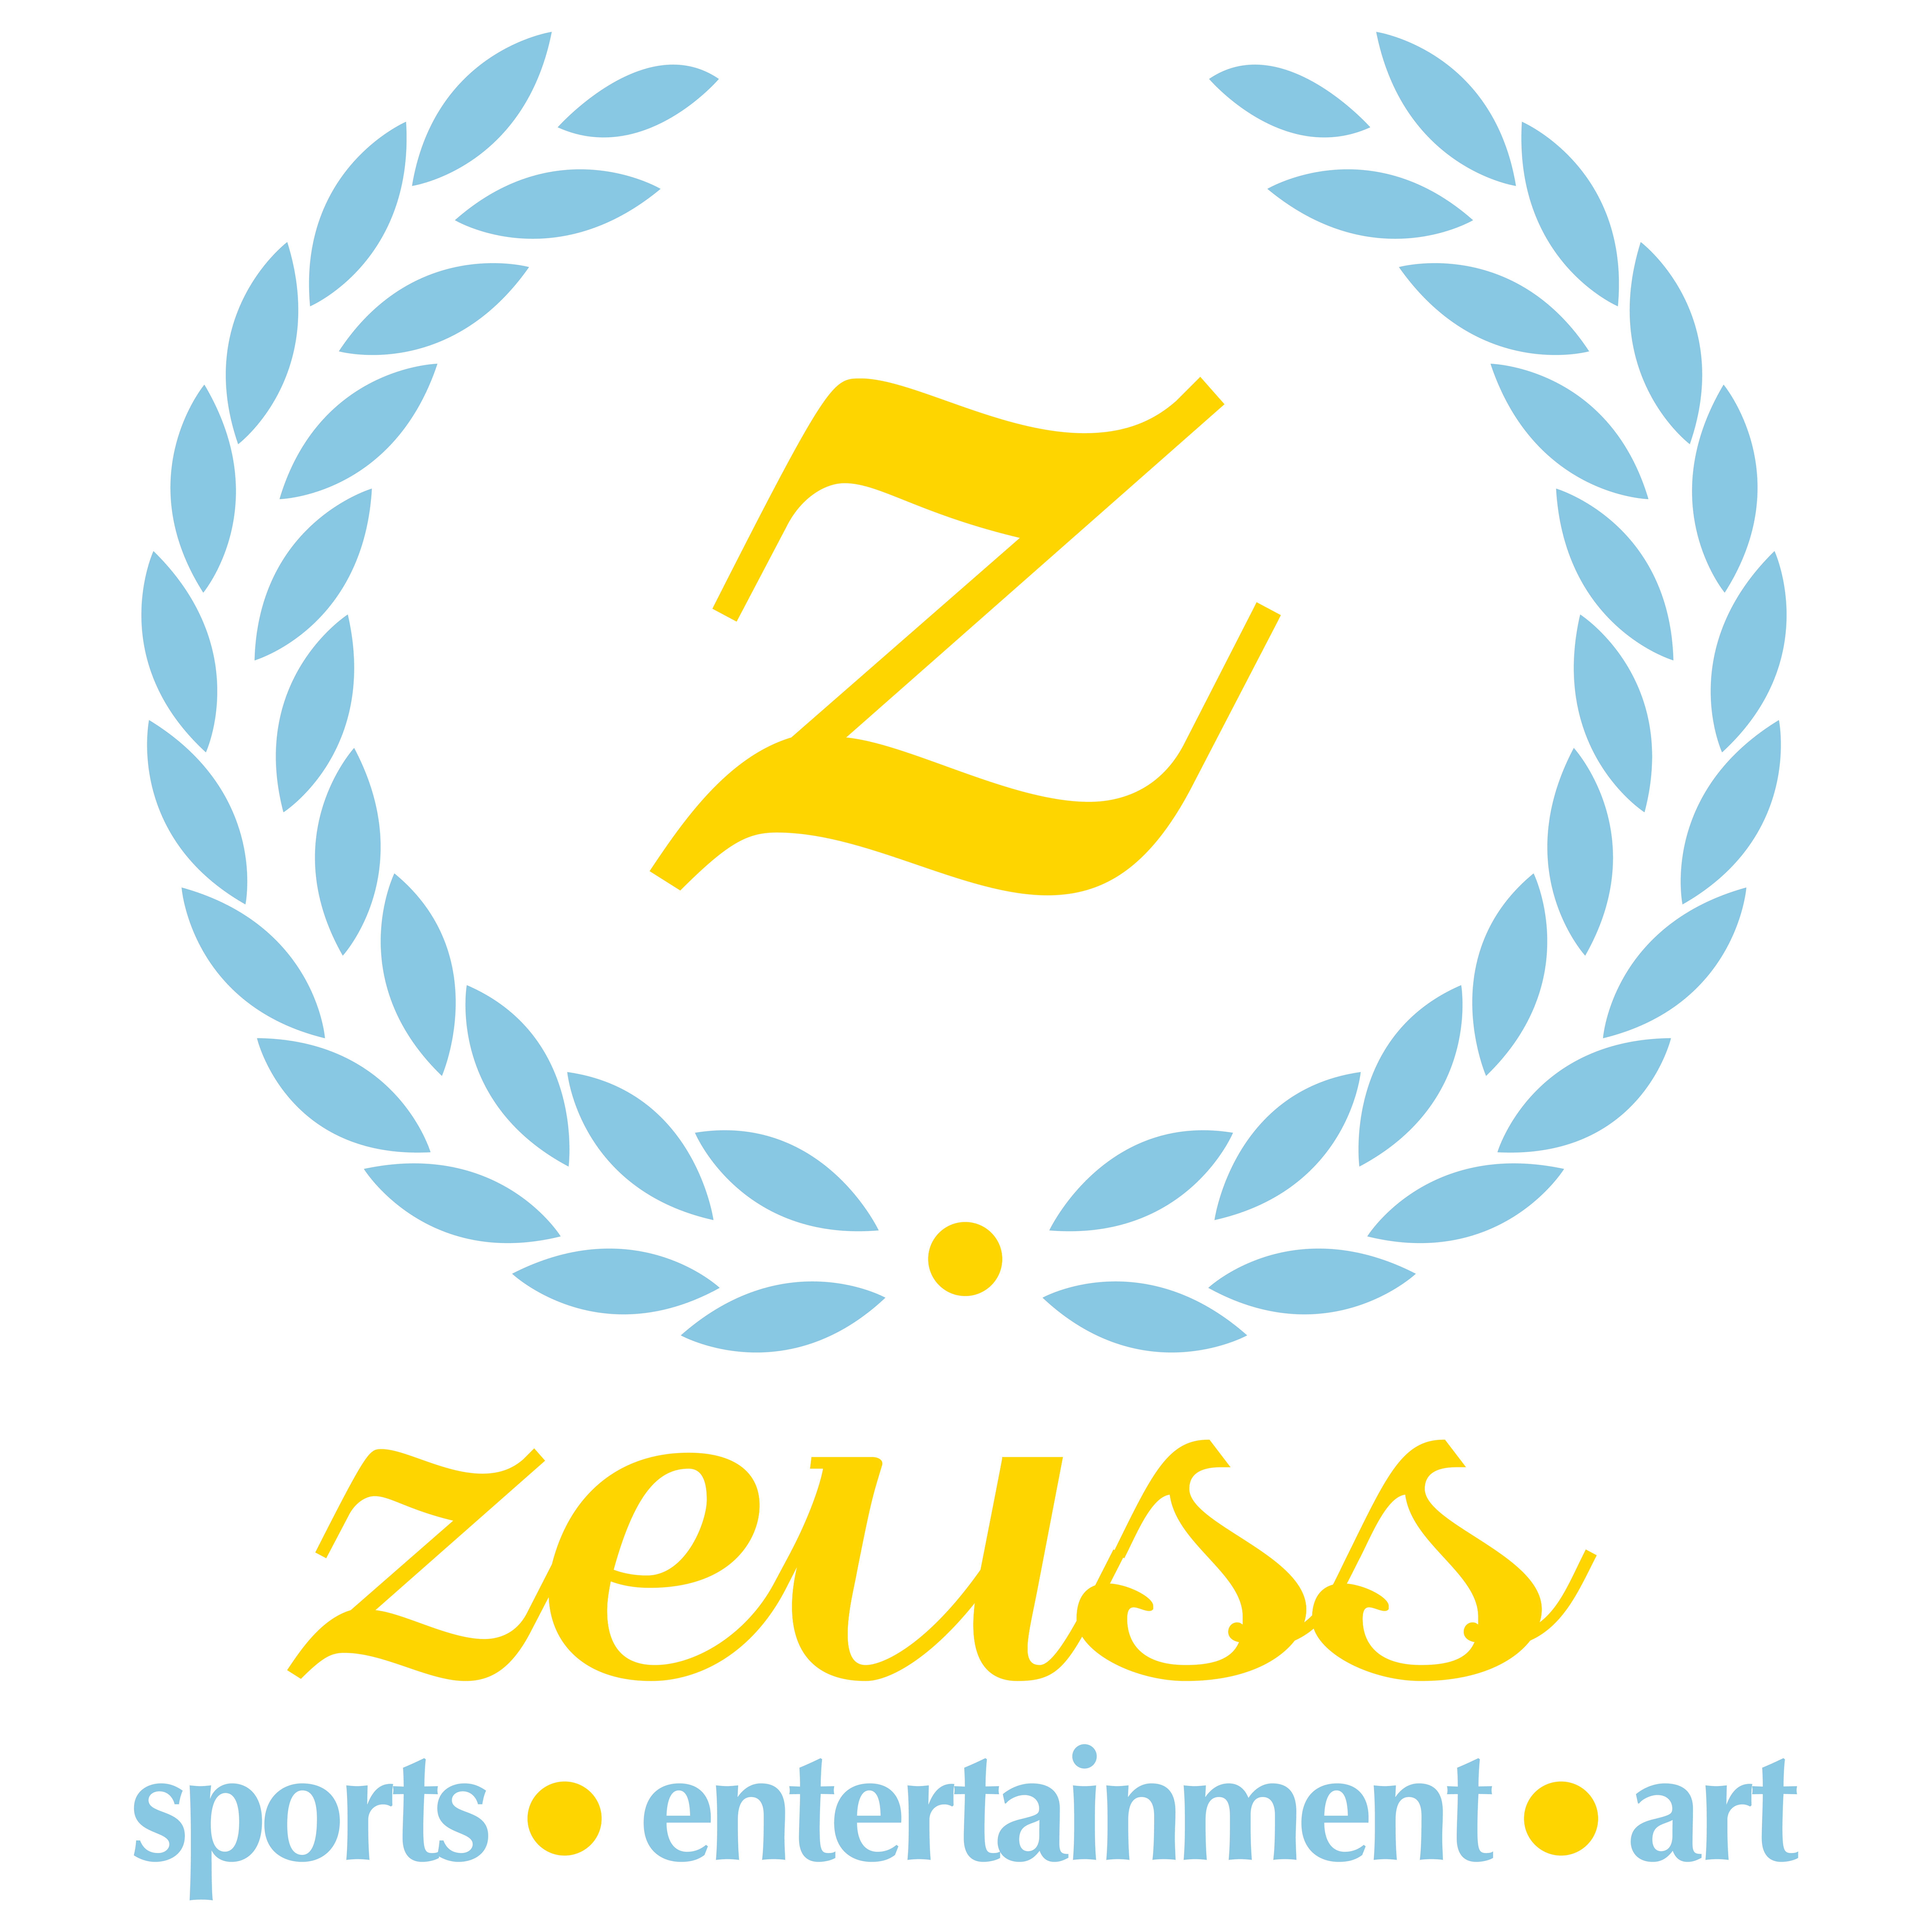 Zeuss Sports Entertainment Art Pvt Ltd